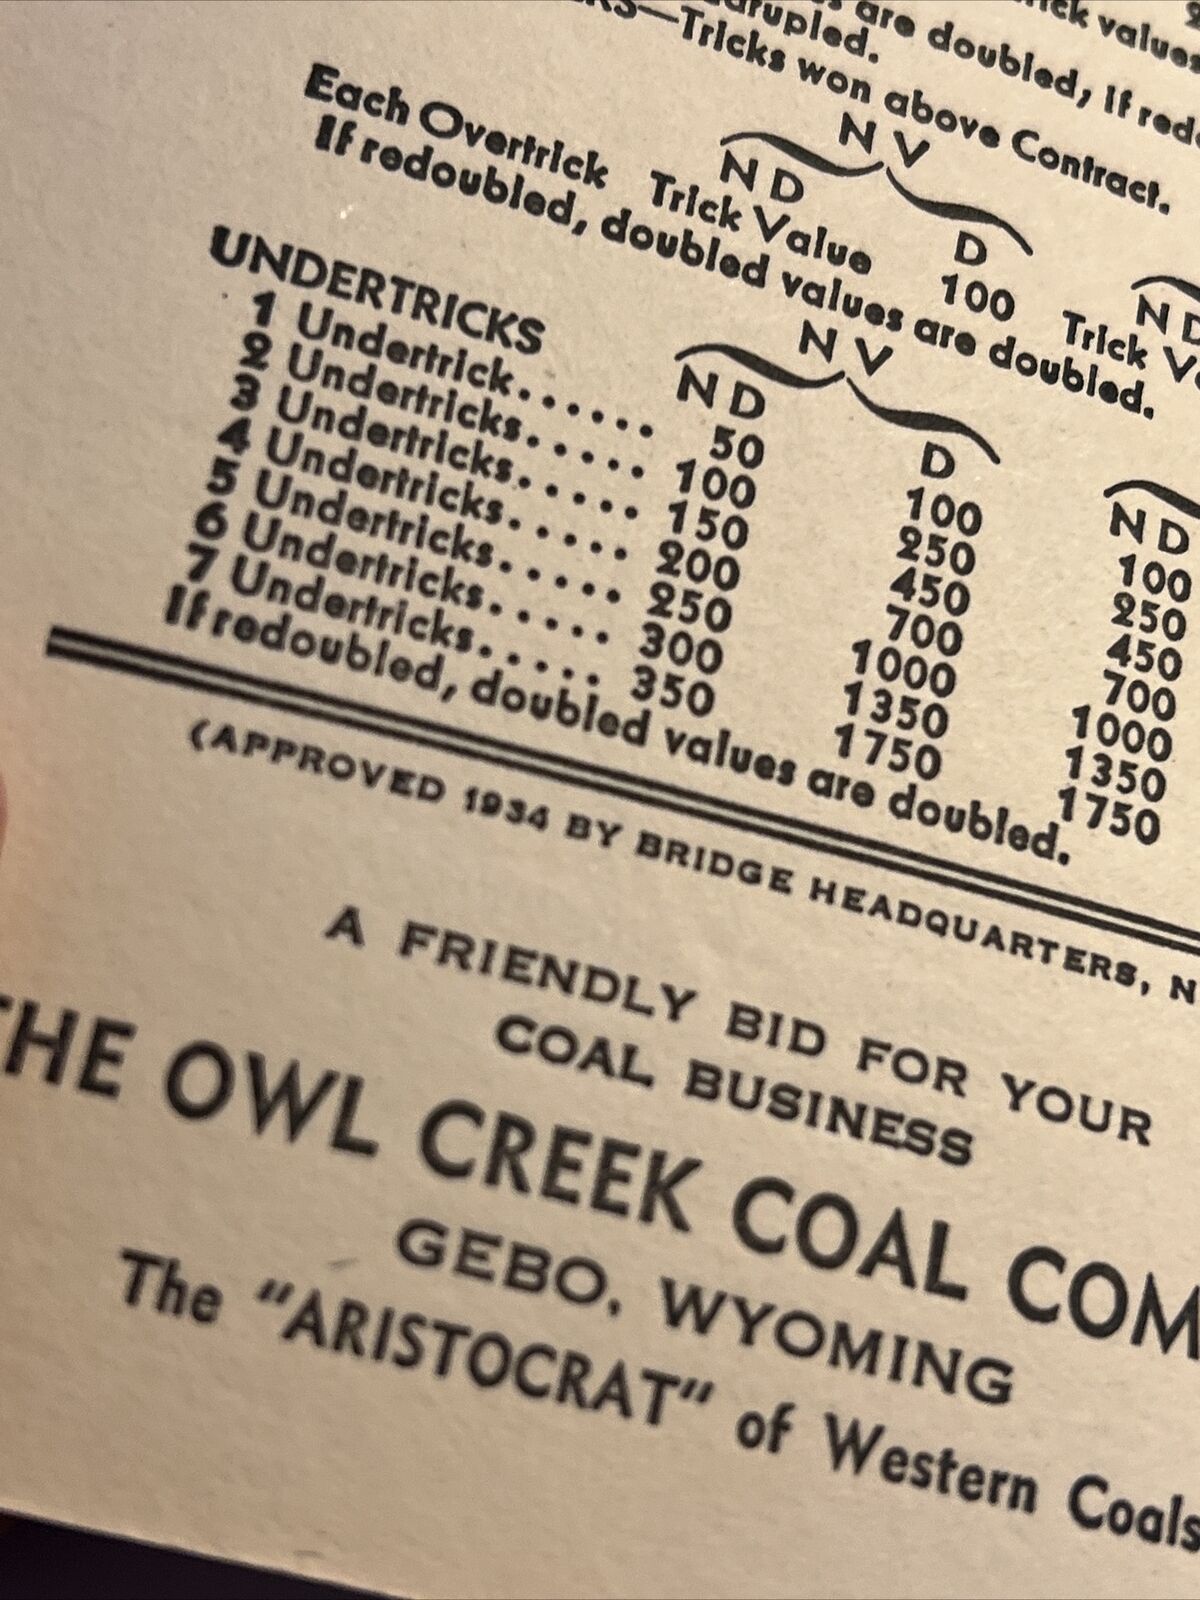 RARE NOS 1934 Owl Creek Coal Company Gebo, WY Bridge Score Sheet UNUSED  #FB Без бренда - фотография #4